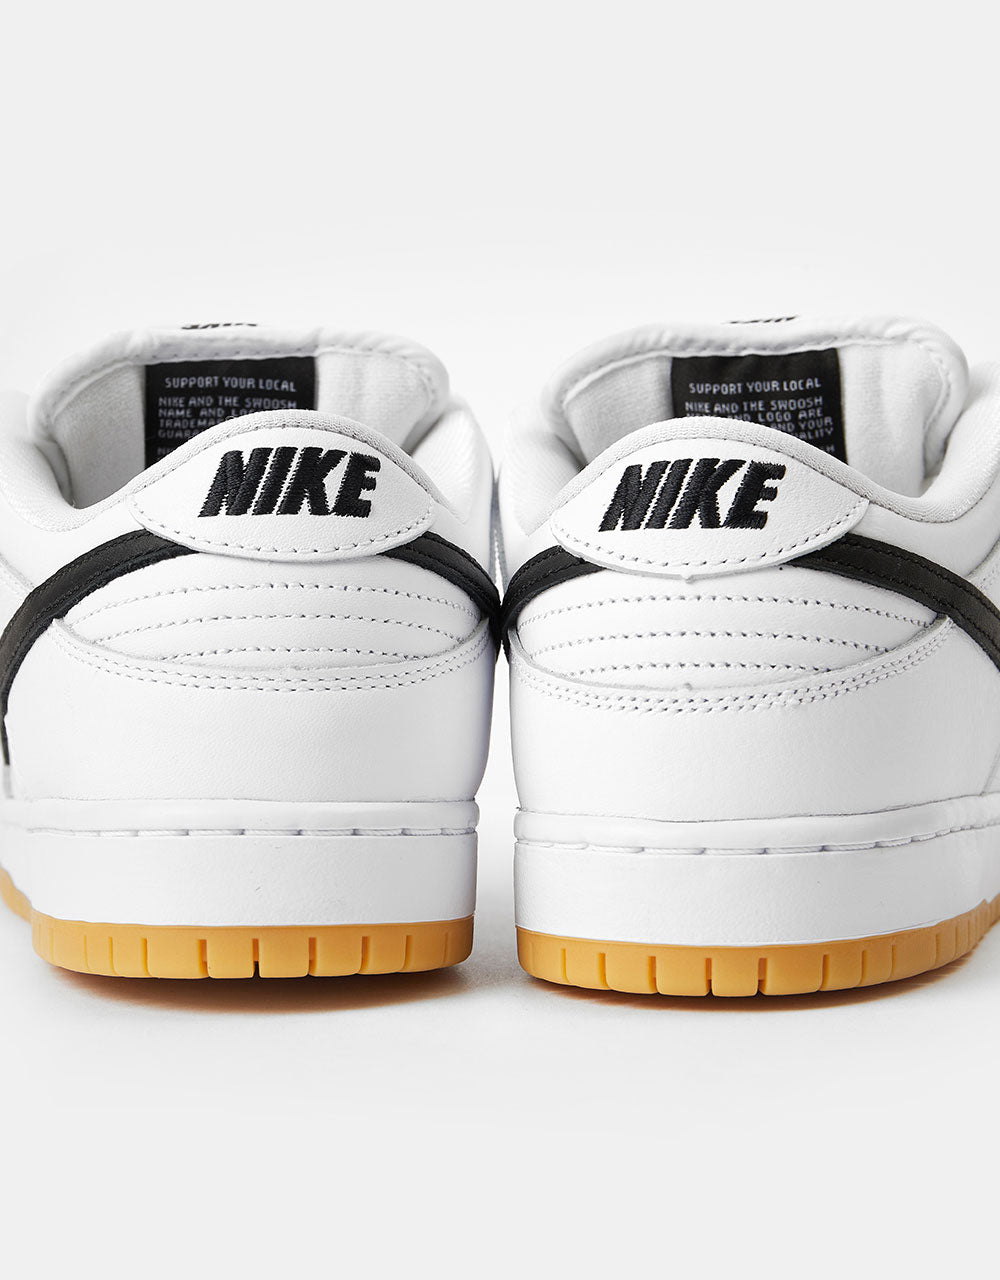 Nike SB Dunk Low Pro Premium Skate Shoes - White/Black-White-Gum Light Brown